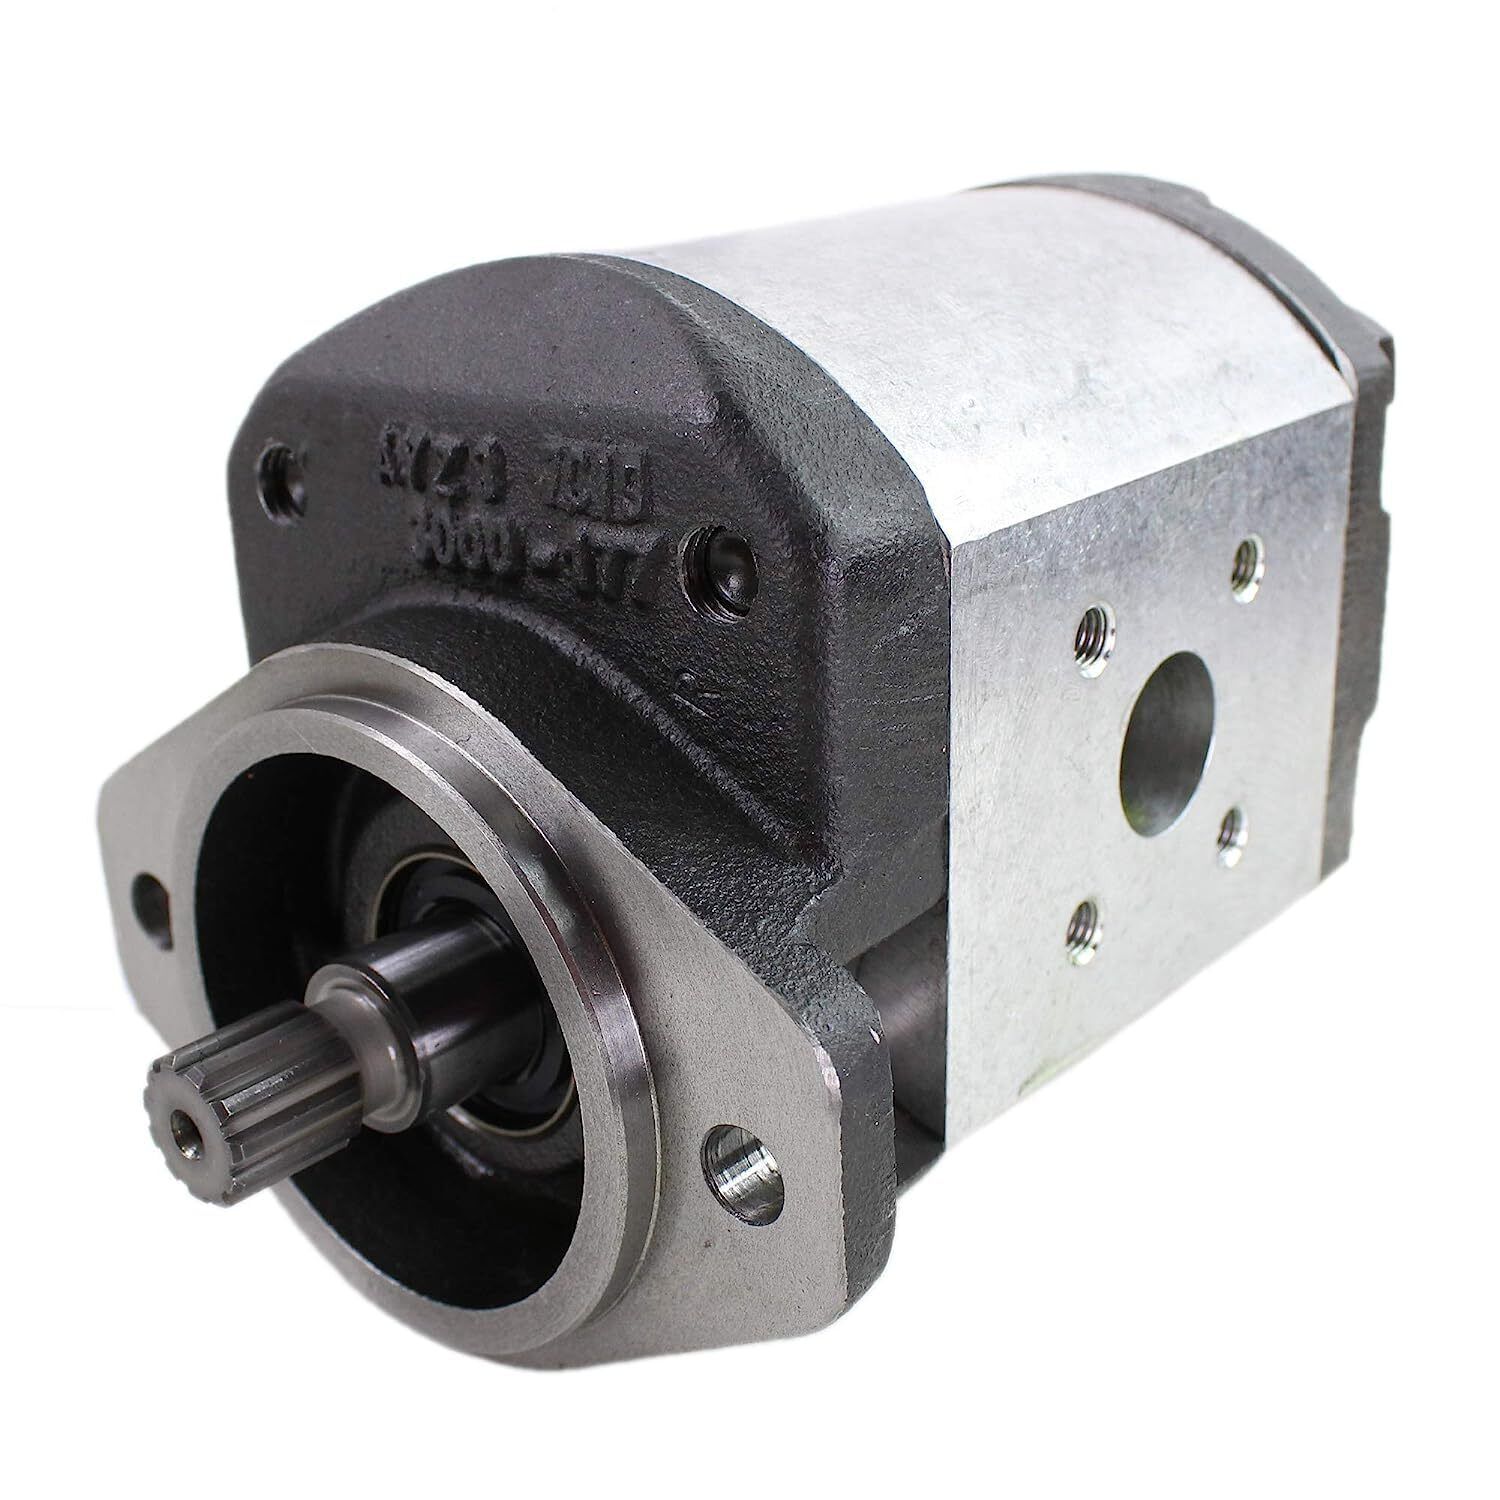 TTParts AL200830 Hydraulic Pump for John Deere SE6410, SE6510, SE6520, SE6610